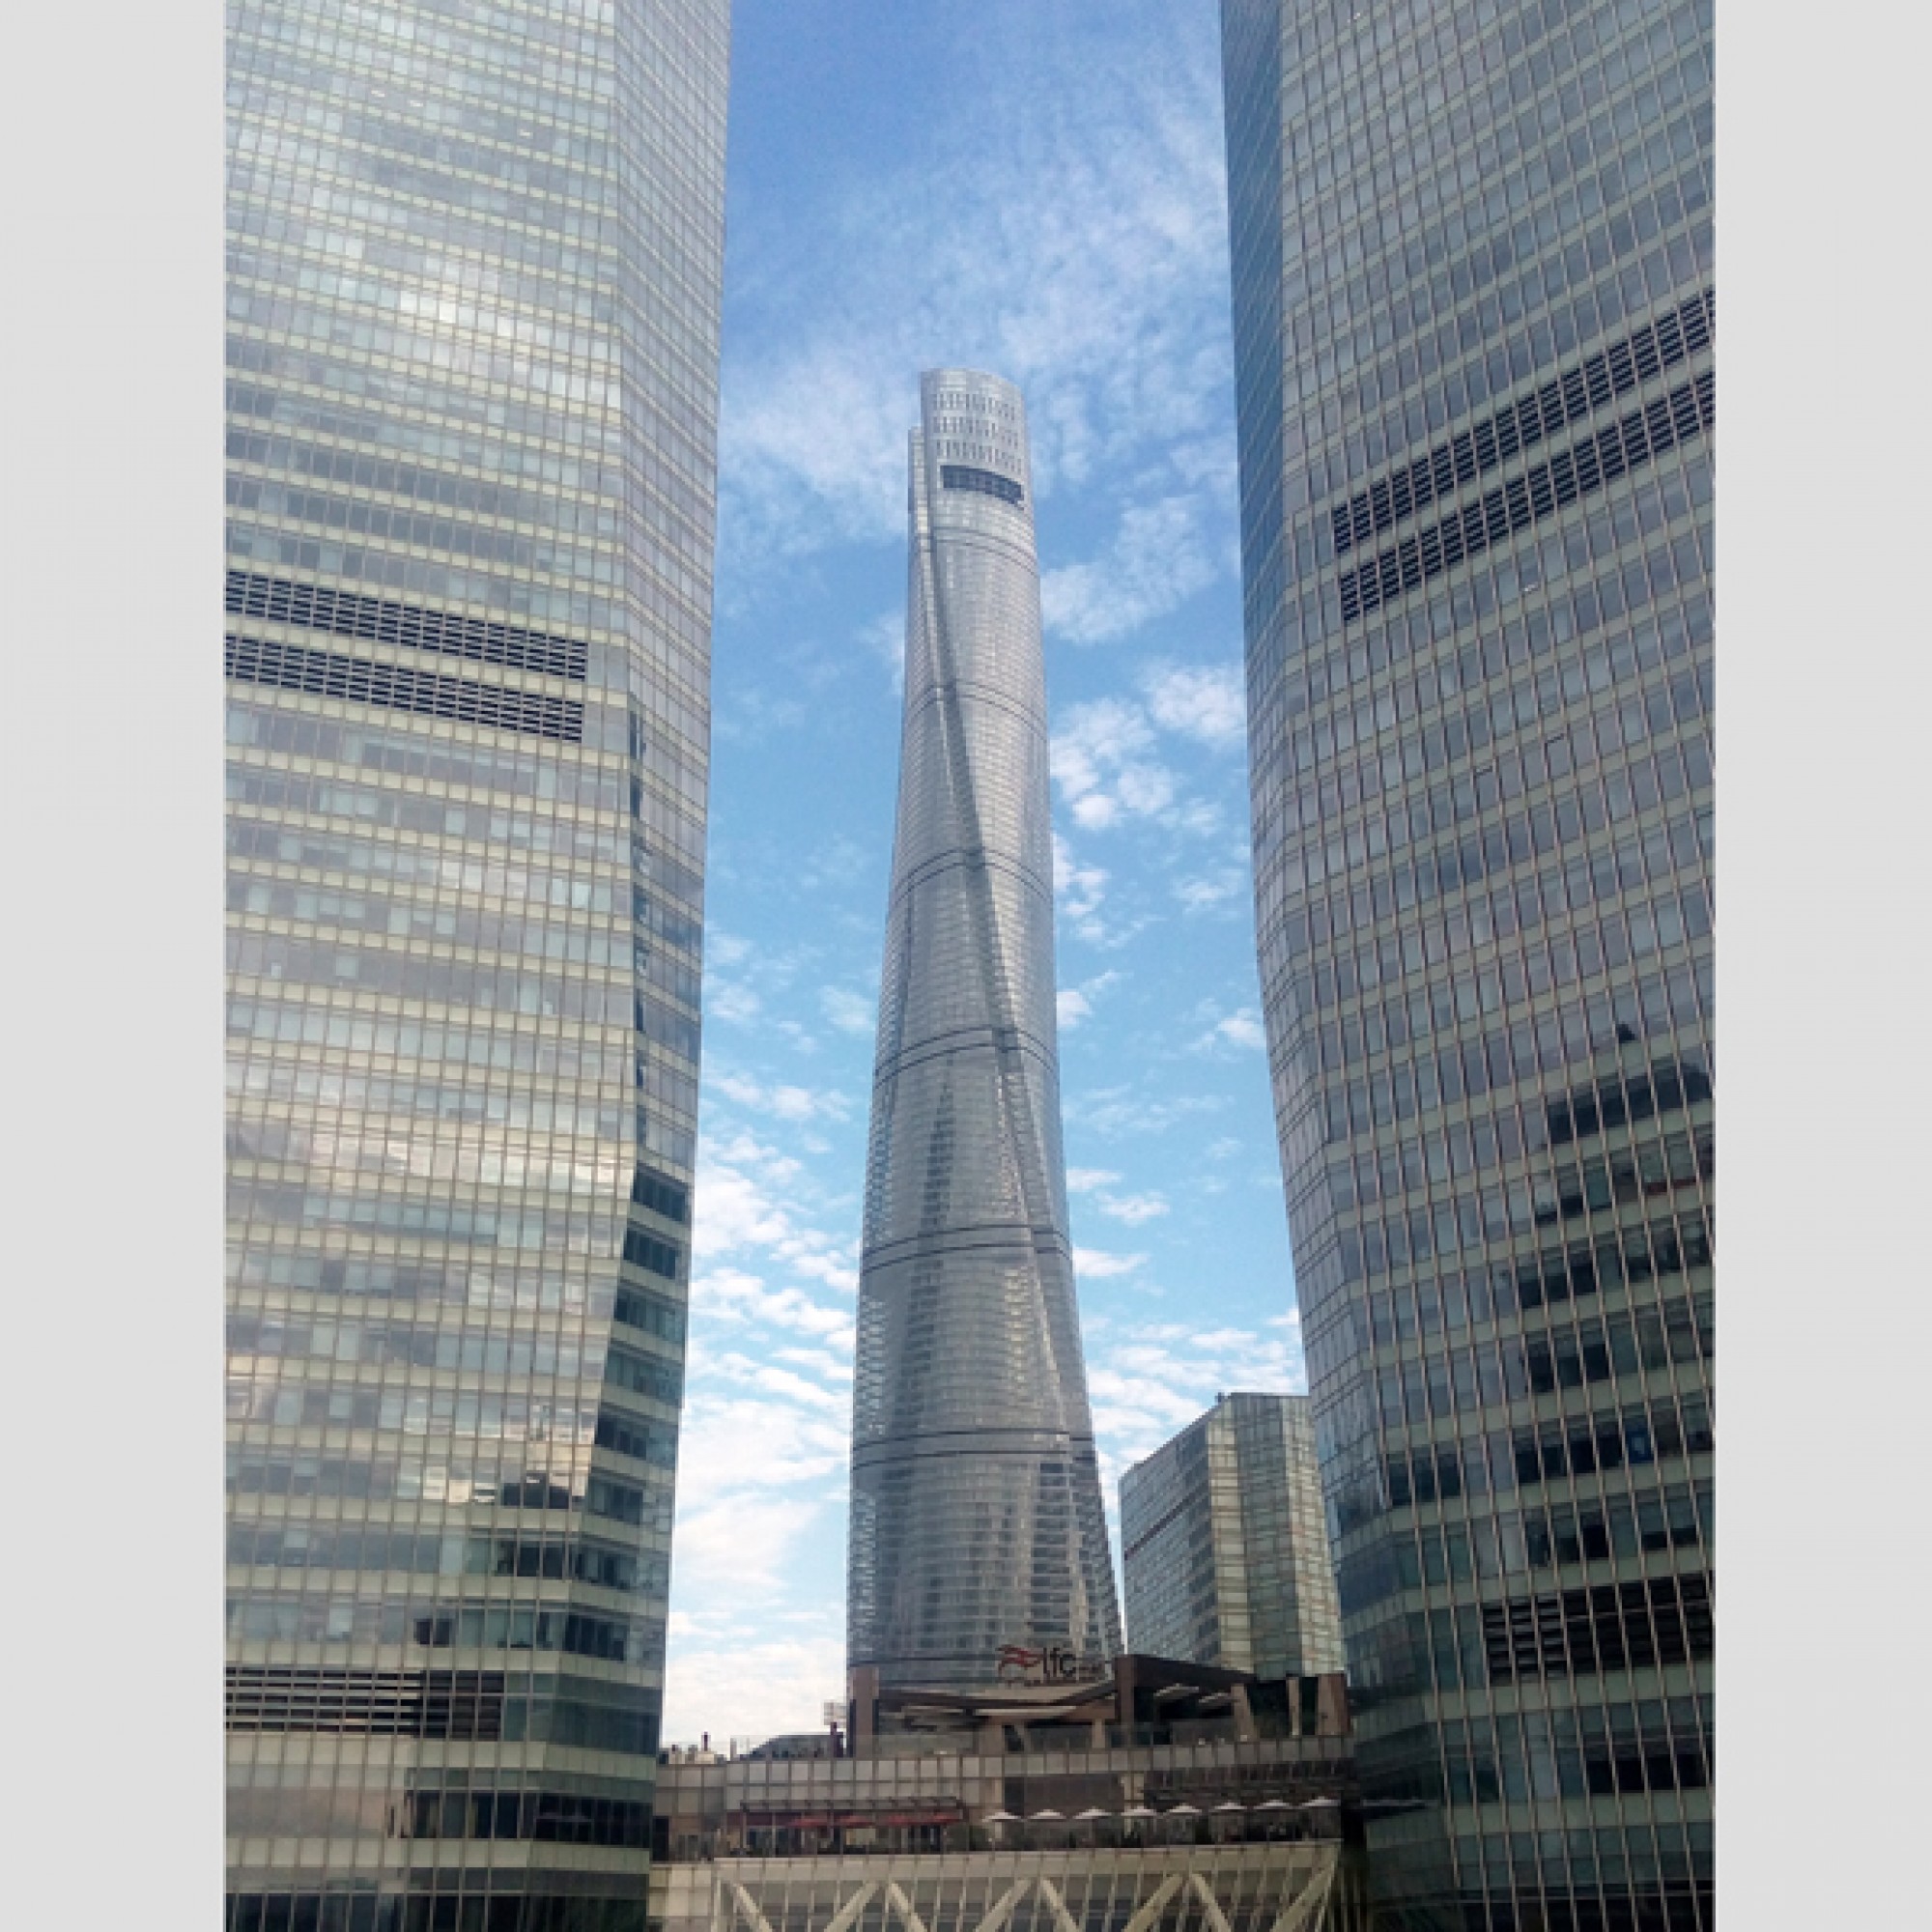 Die Top Ten des Rankings: Rang 1, Shanghai Tower, China, fertigestellt 2015,  632 Meter hoch, 128 Stockwerke, Rotation 120 Grad, Rotation pro Etage 0.938 Grad. (Qa003qa003, CC BY-SA 4.0, Wikimedia)  1/10